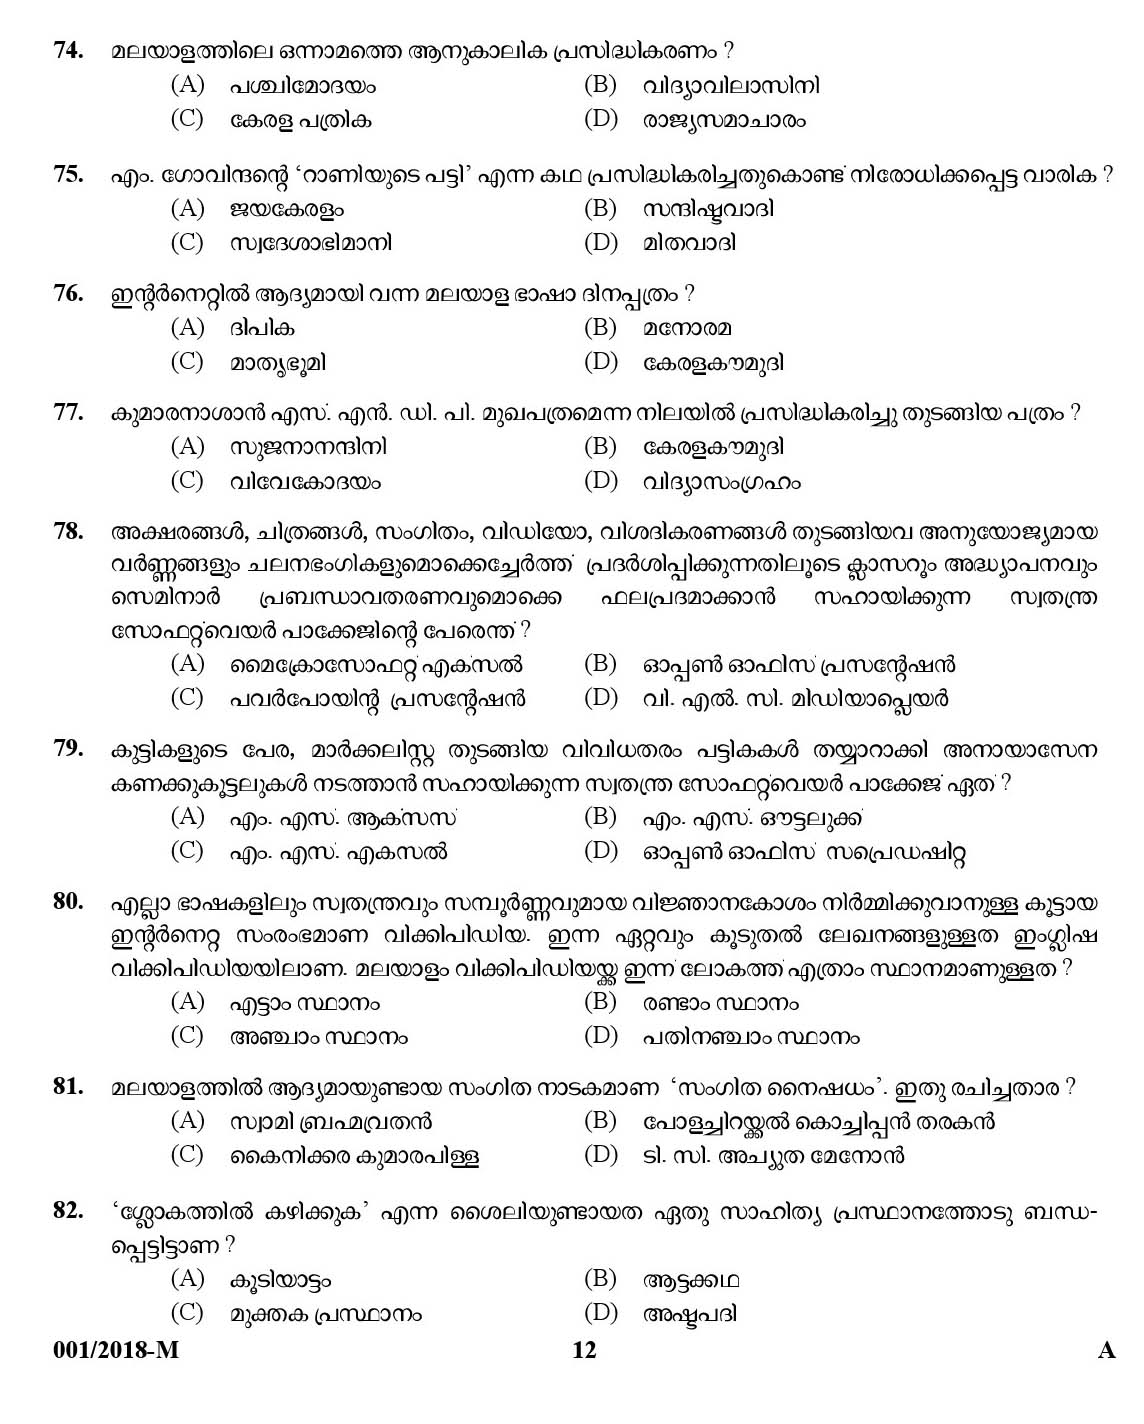 Kerala PSC High School Assistant Malayalam Question Code 0012018 M 11